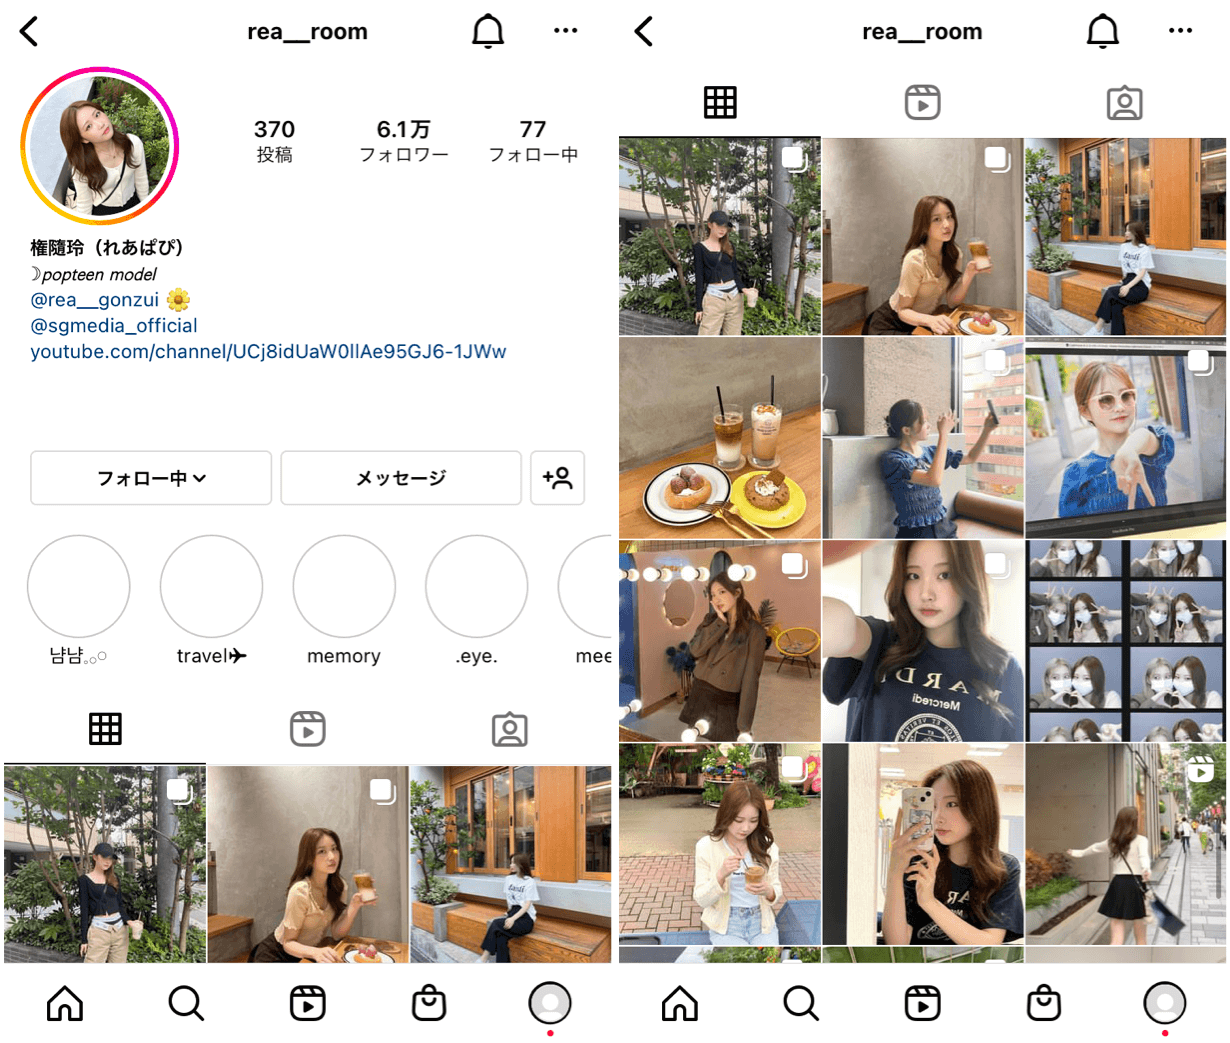 Instagram-high-school-cosmetic- rea__room